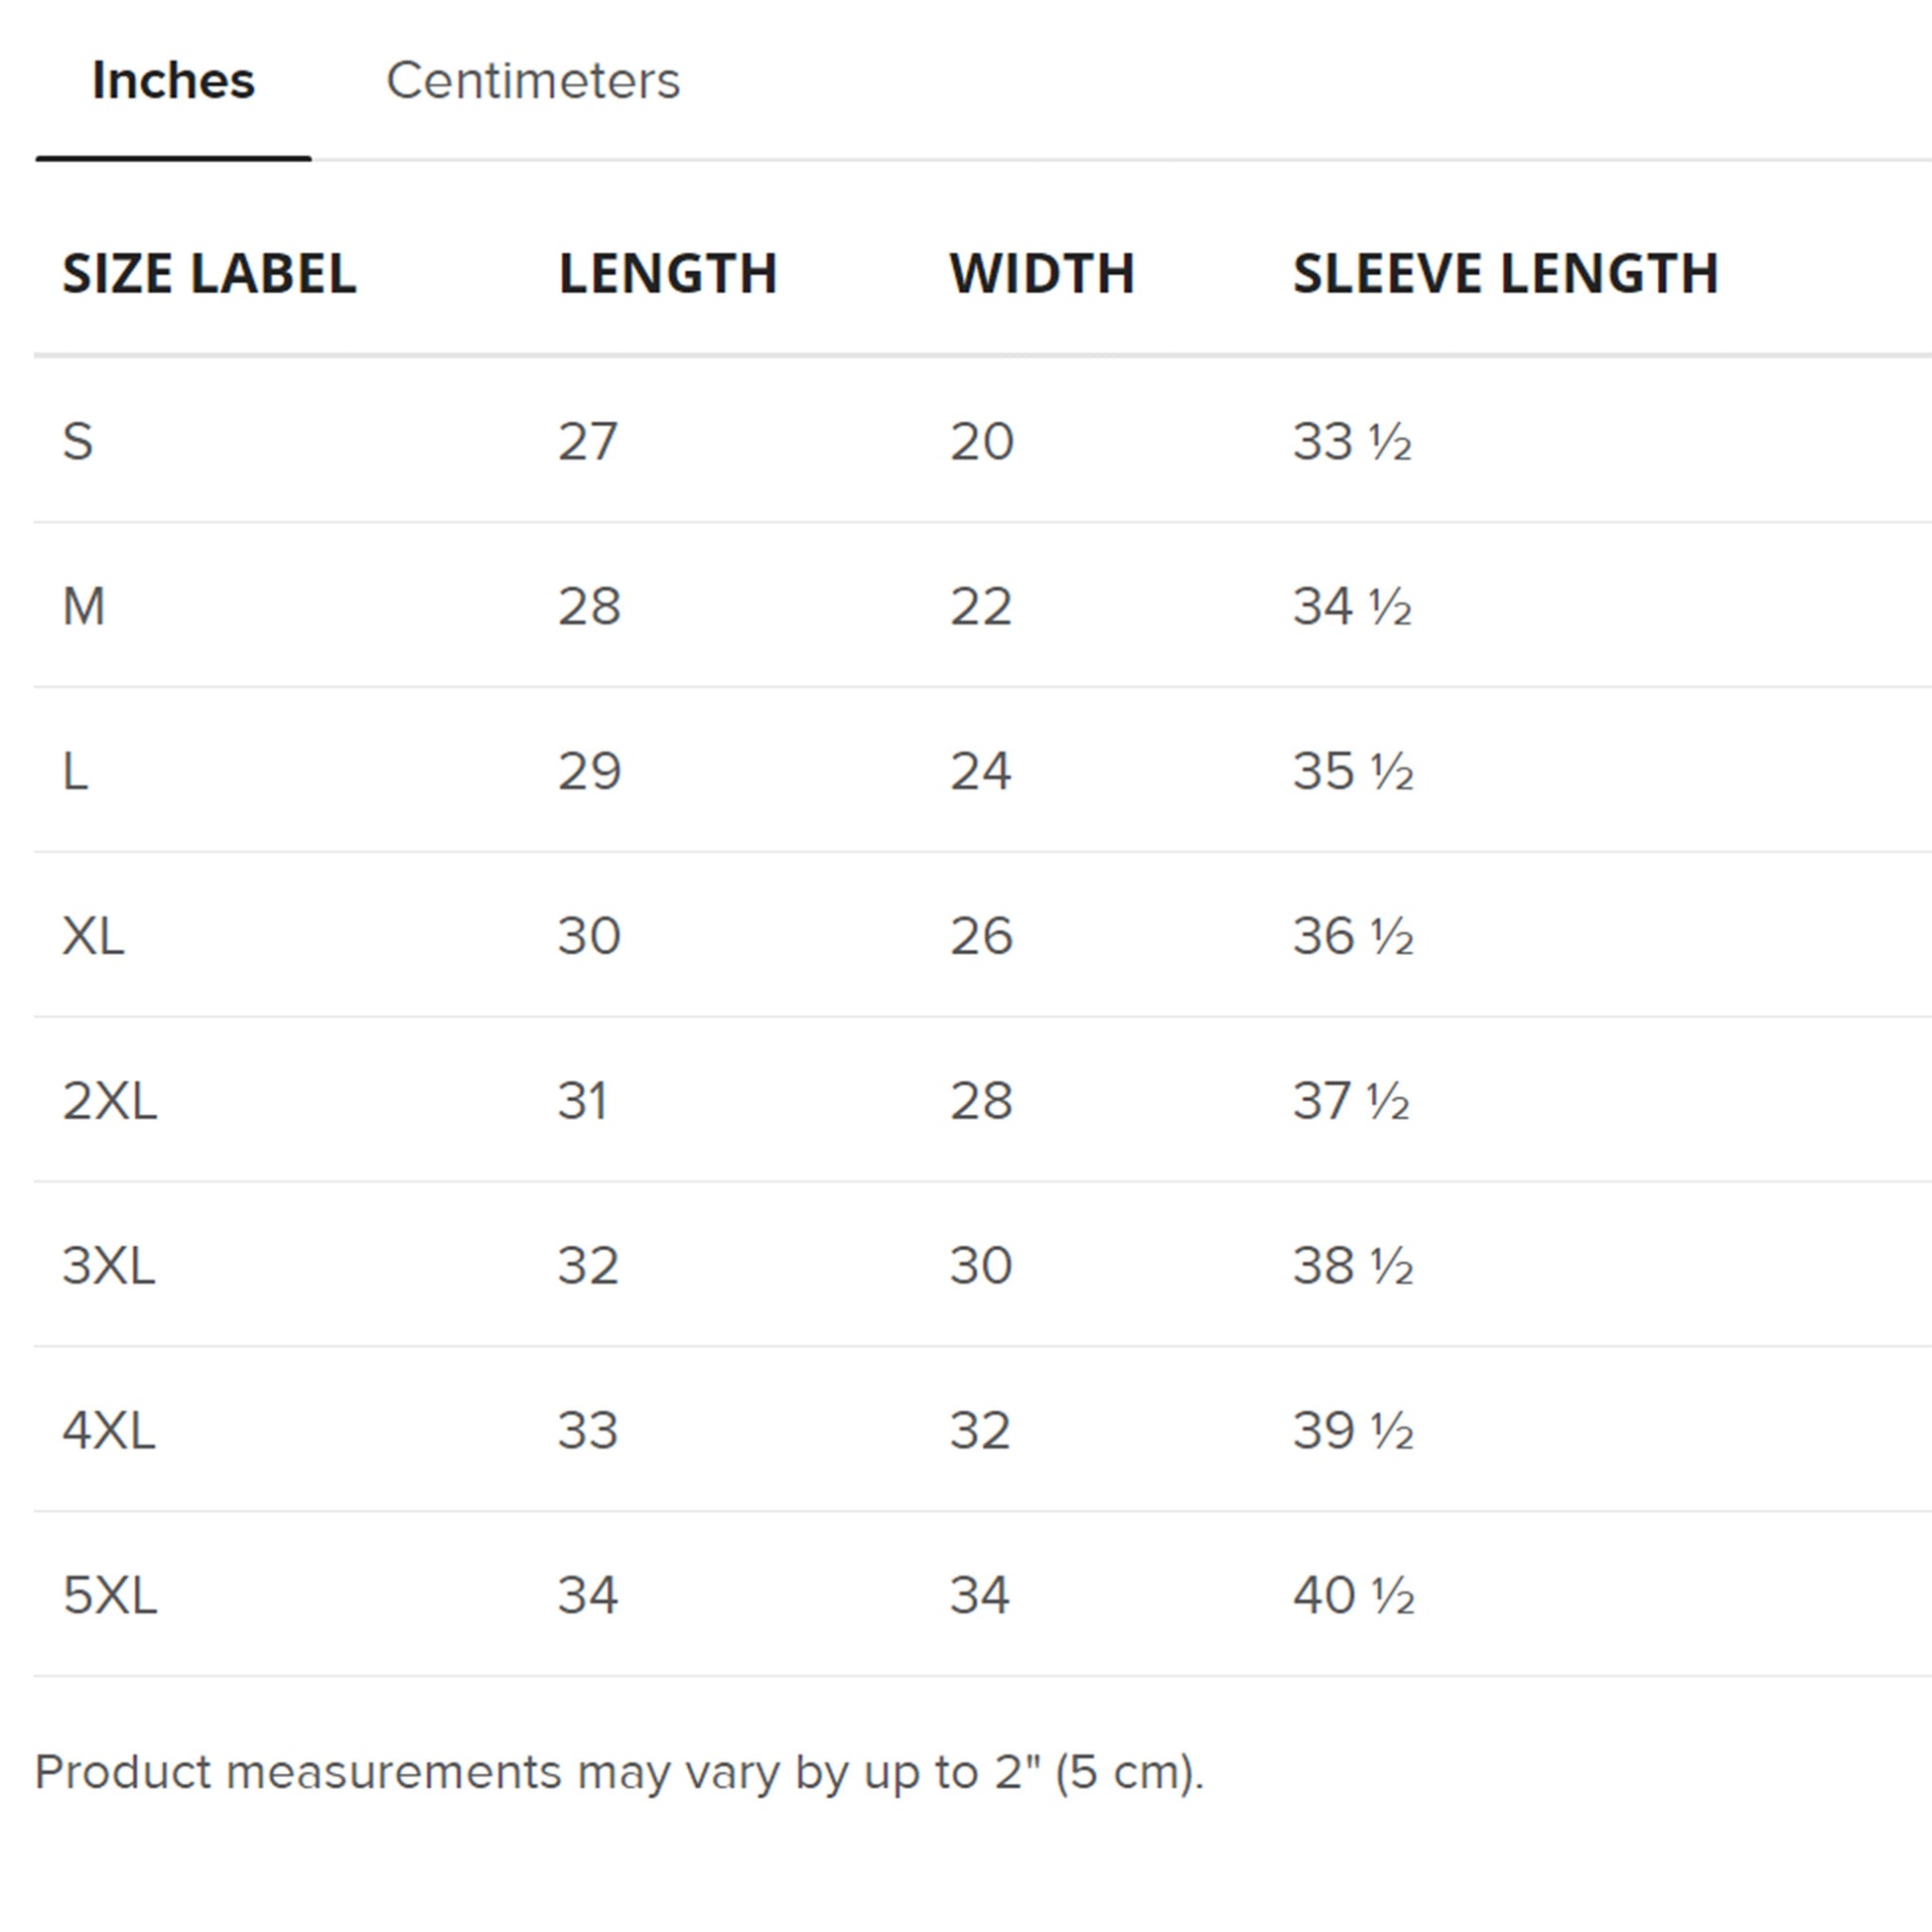 Inches of product measurement for unisex SPARS MOTONOBU TEZUKA hoodie